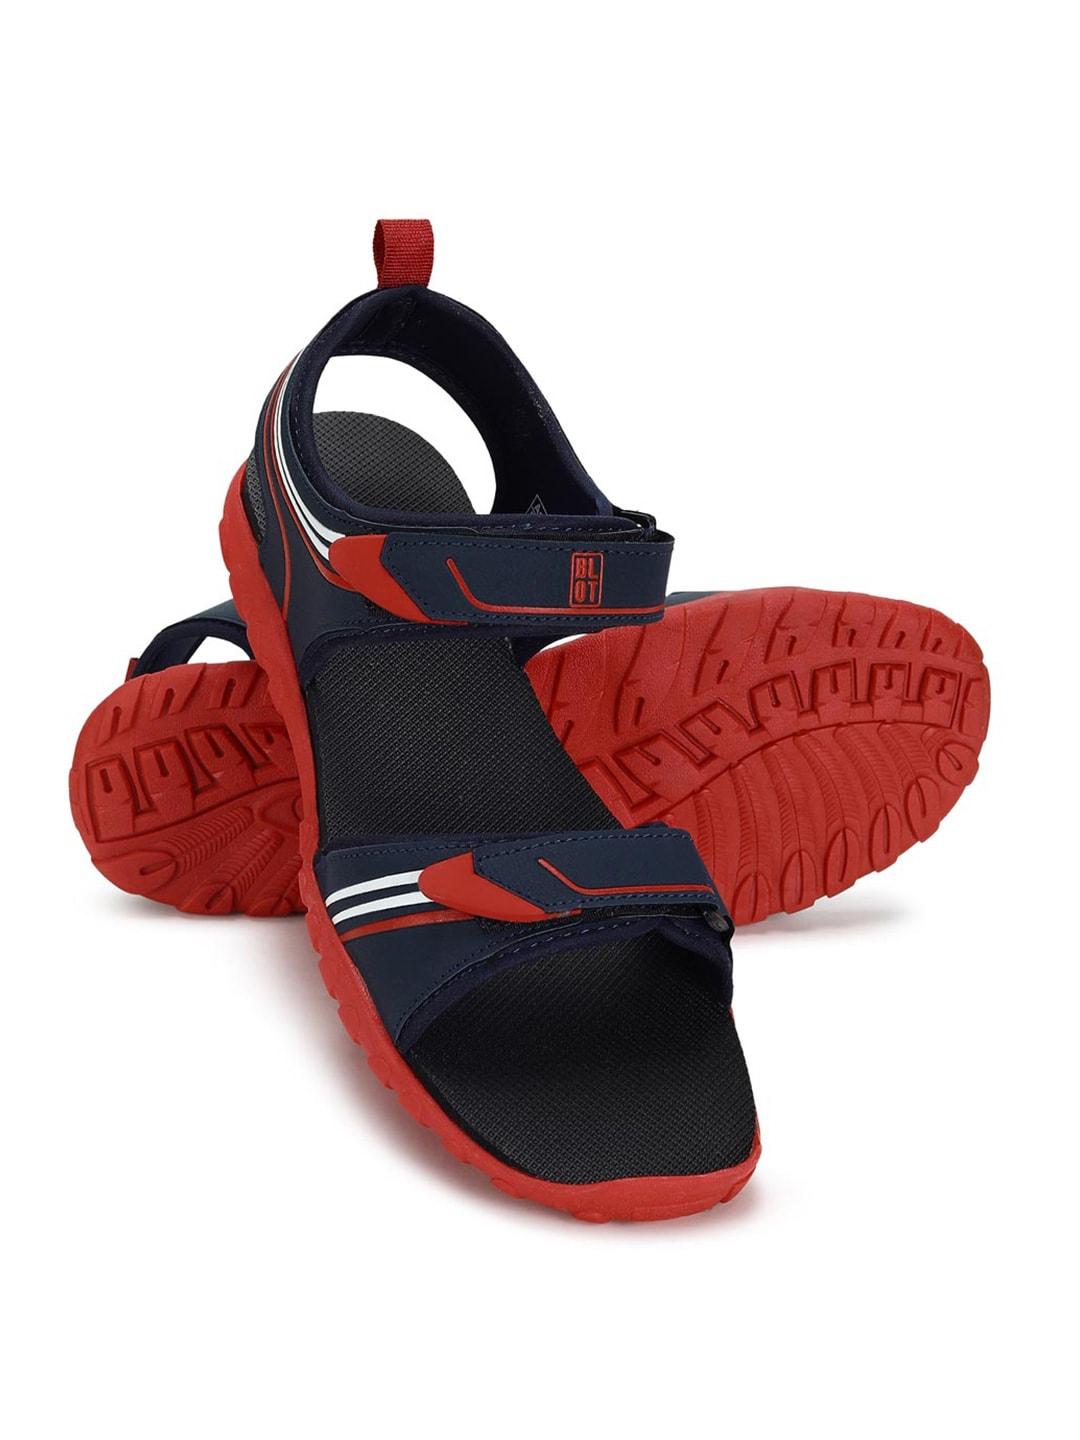 paragon stylish lightweight sports sandal